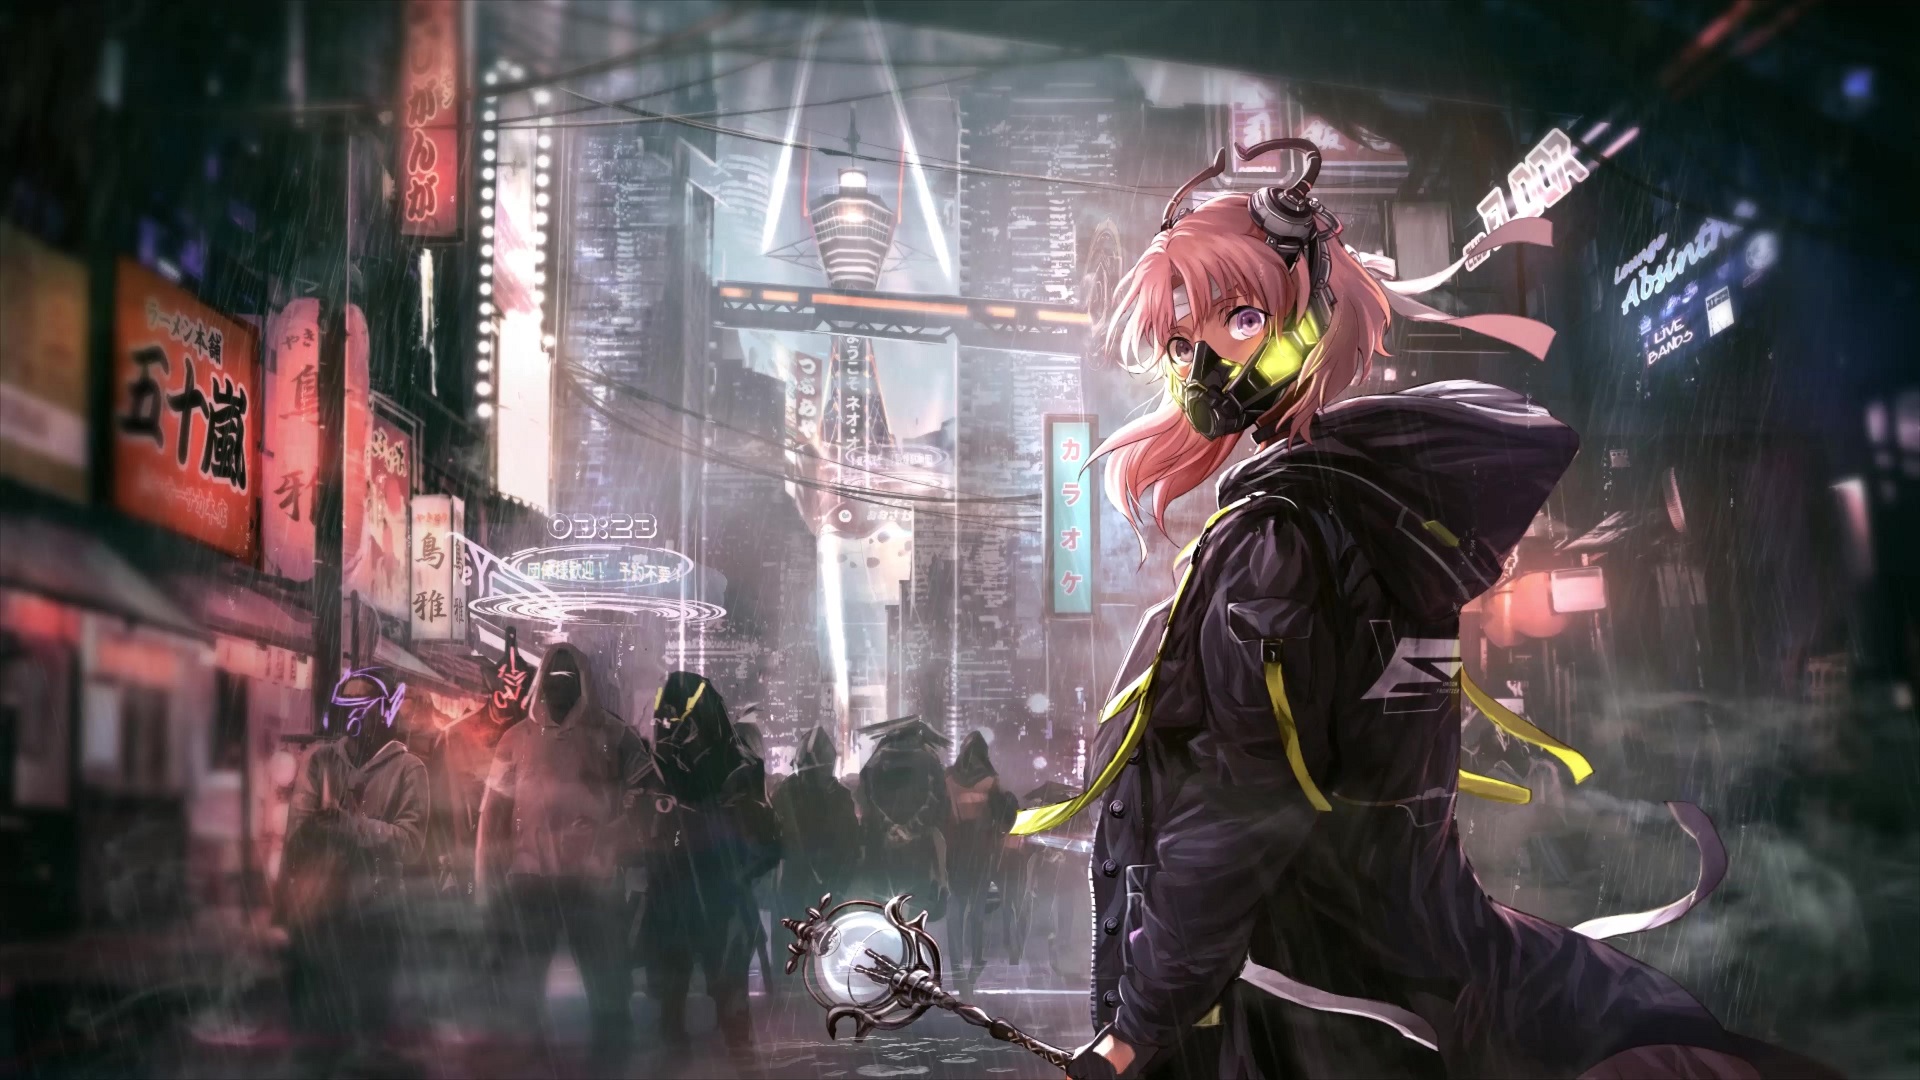 ArtStation - Cyberpunk city explorations